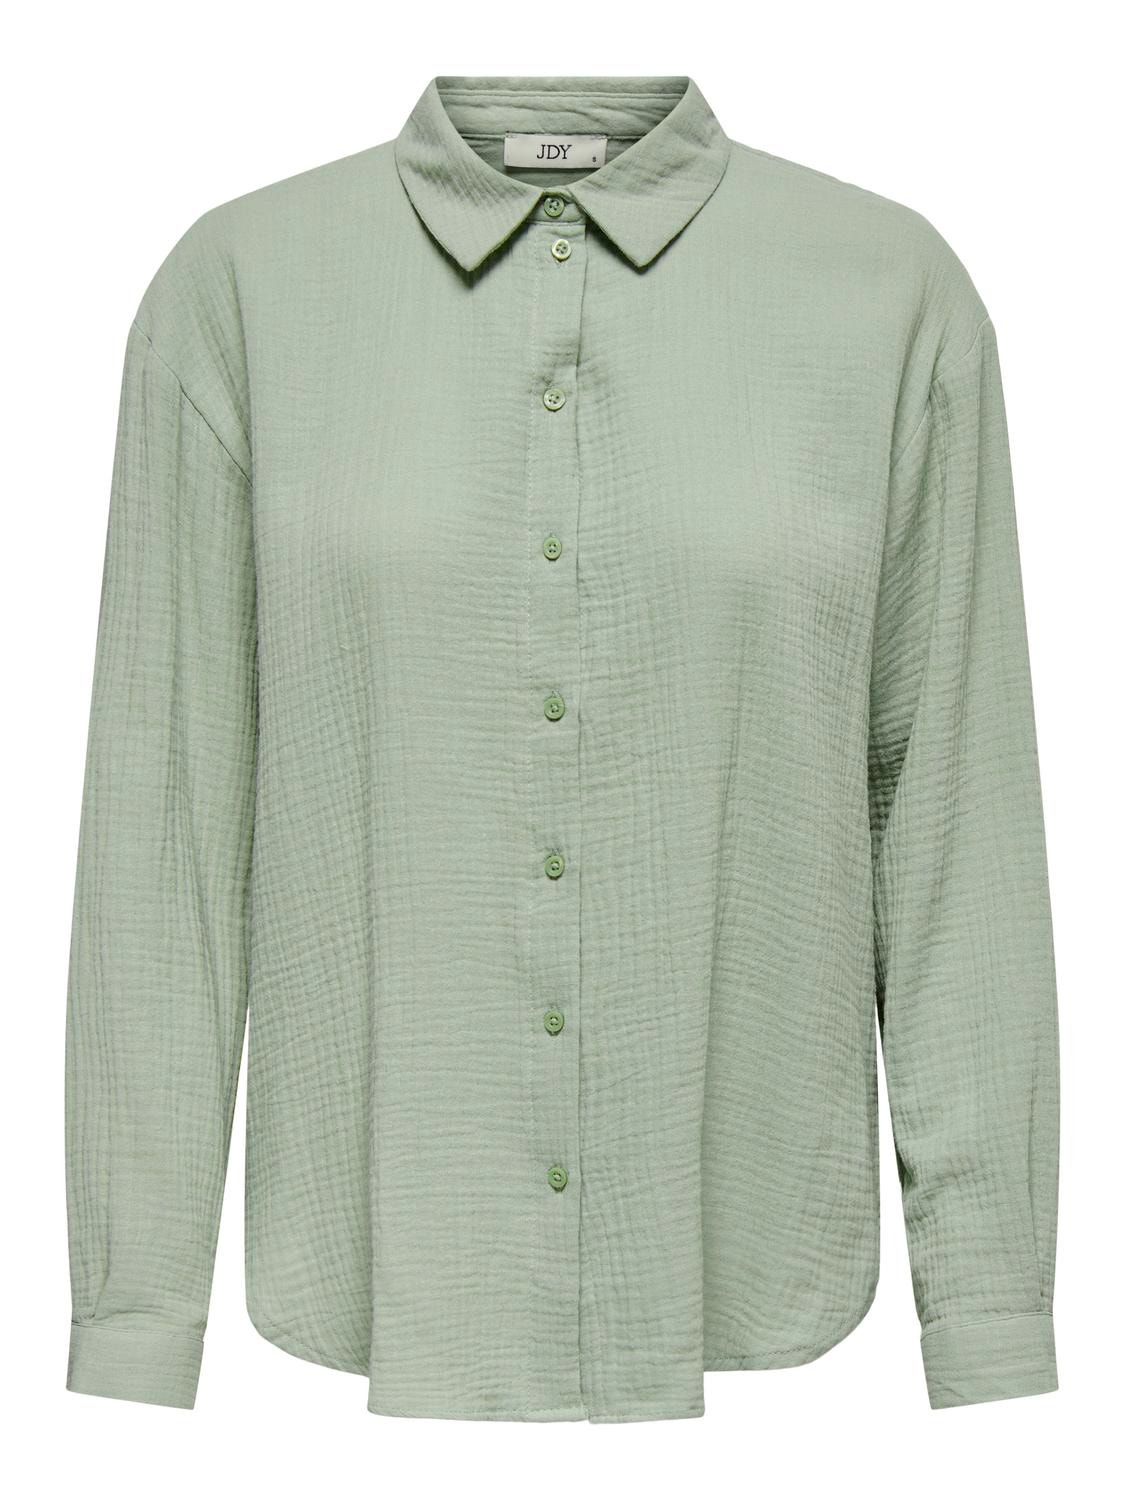 ONLY Chemises Regular Fit Col chemise Poignets boutonnés Manches volumineuses -Desert Sage - 15271018